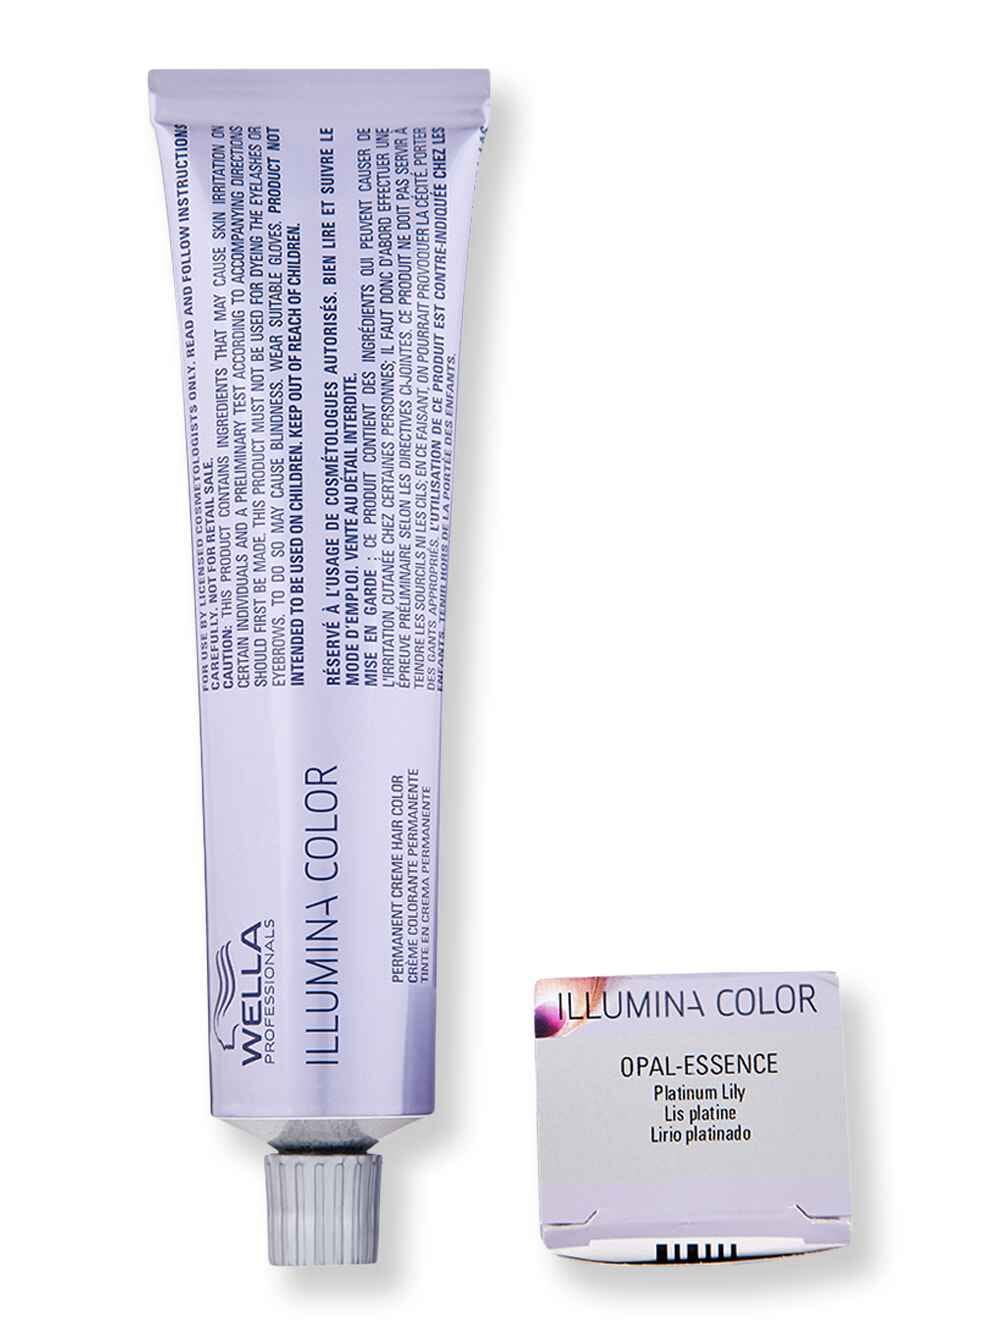 Wella Wella Illumina Opal-Essence 2 ozPlatinum Lily Hair Color 